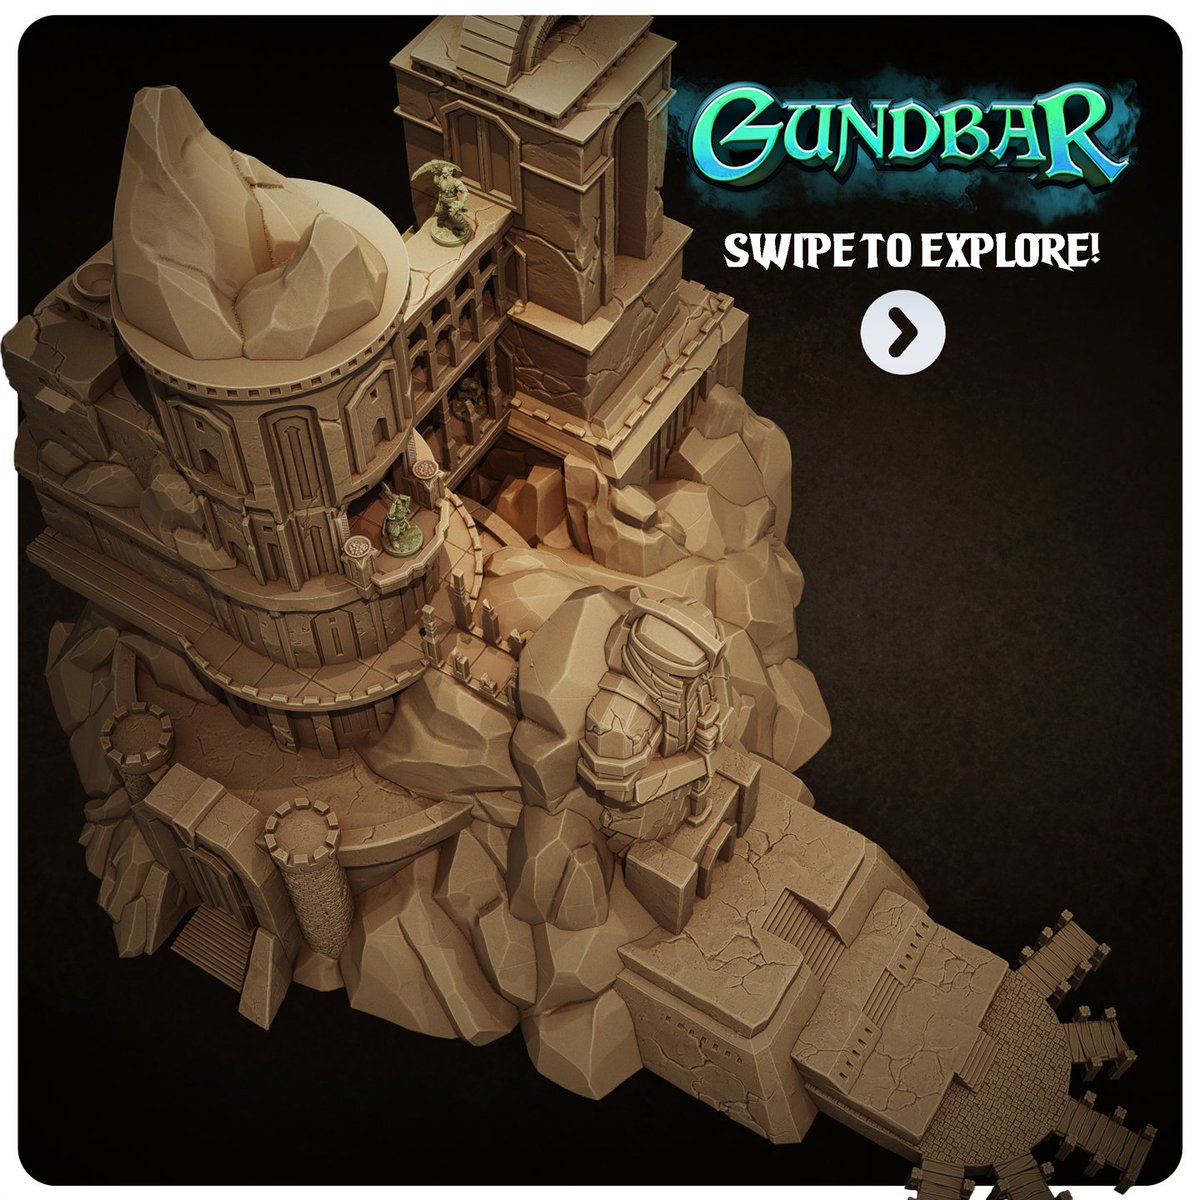 Get ready for February 14th, #Gundbar is launching on #Kickstarter! 

#3Dprinting #3dprintableterrain #3dprintingdnd #tabletopterrain